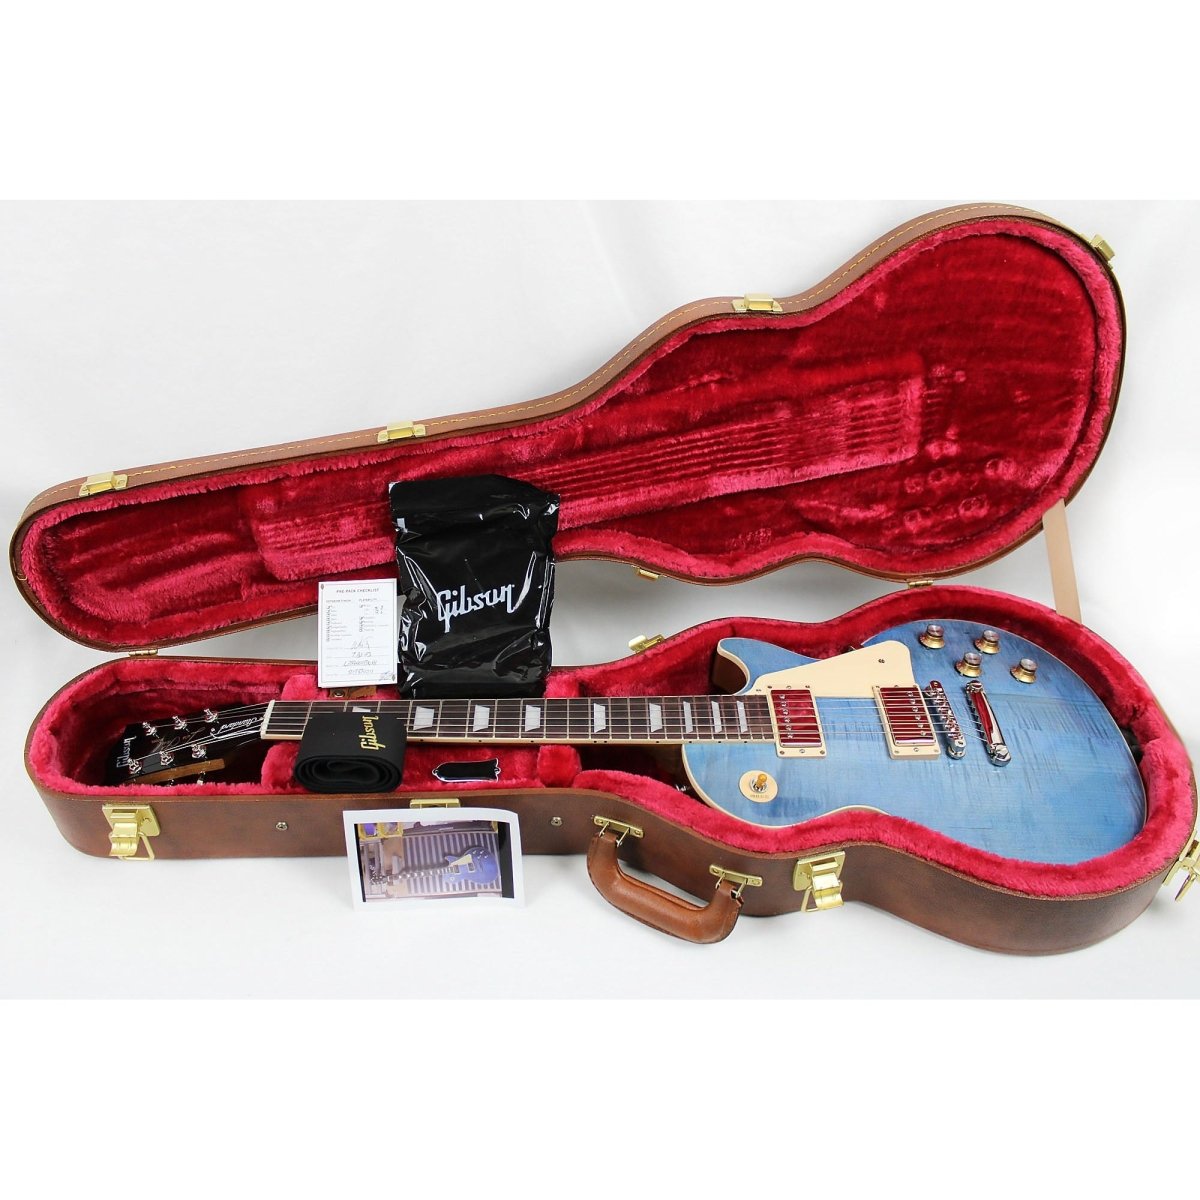 Gibson Les Paul Standard '60s Figured Top - Ocean Blue